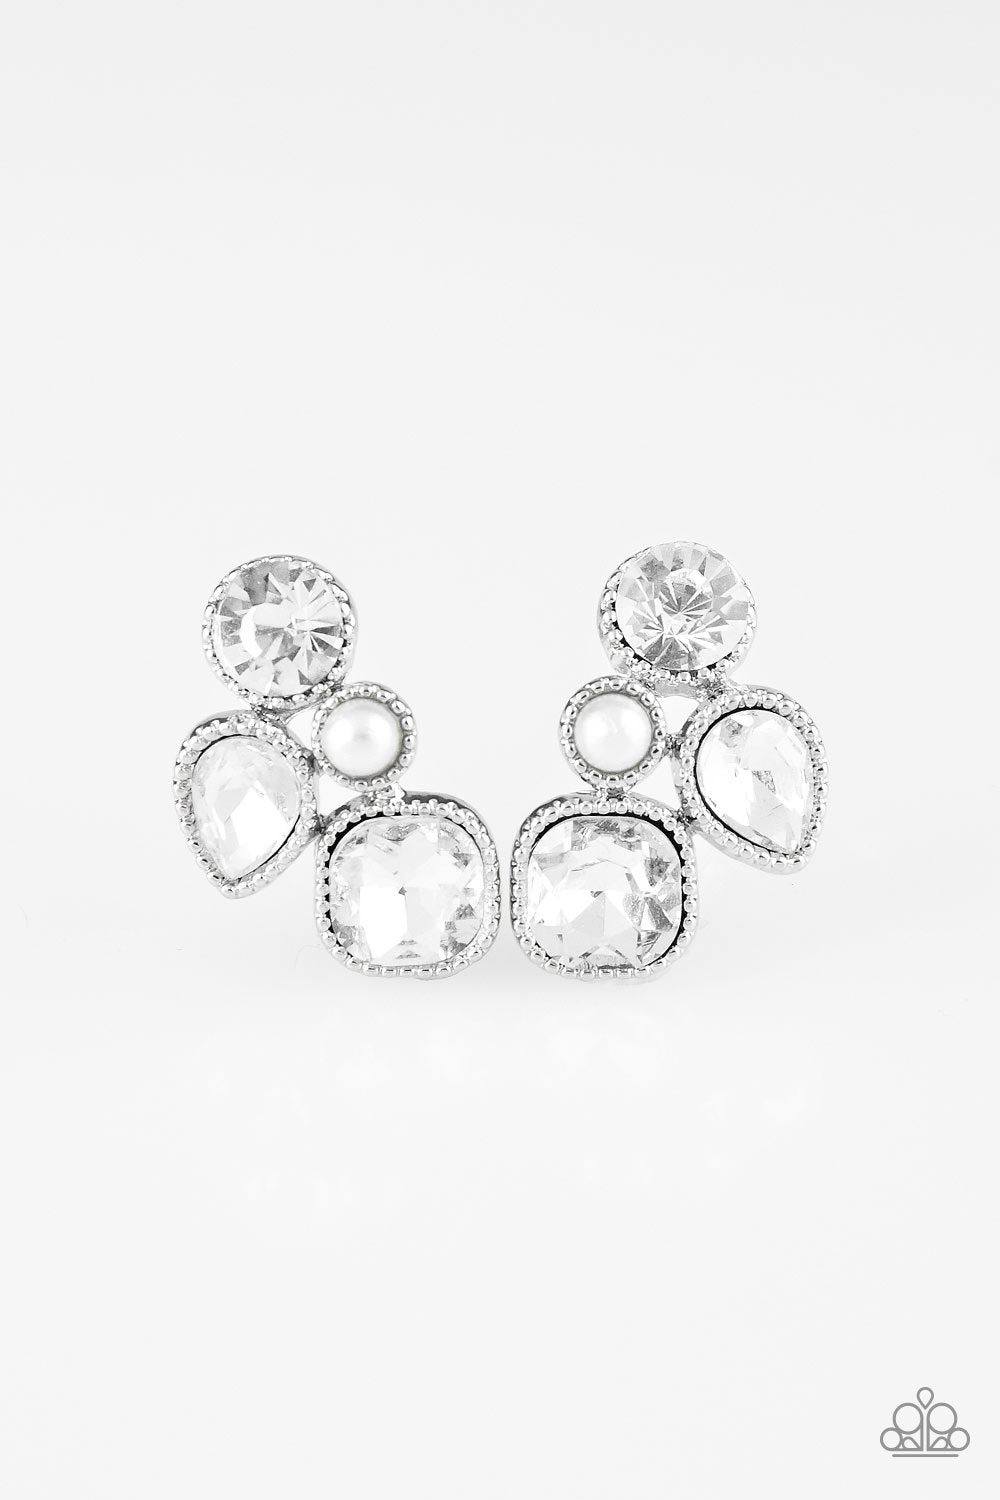 Super Superstar - White Pearl & Bling Earrings - Princess Glam Shop